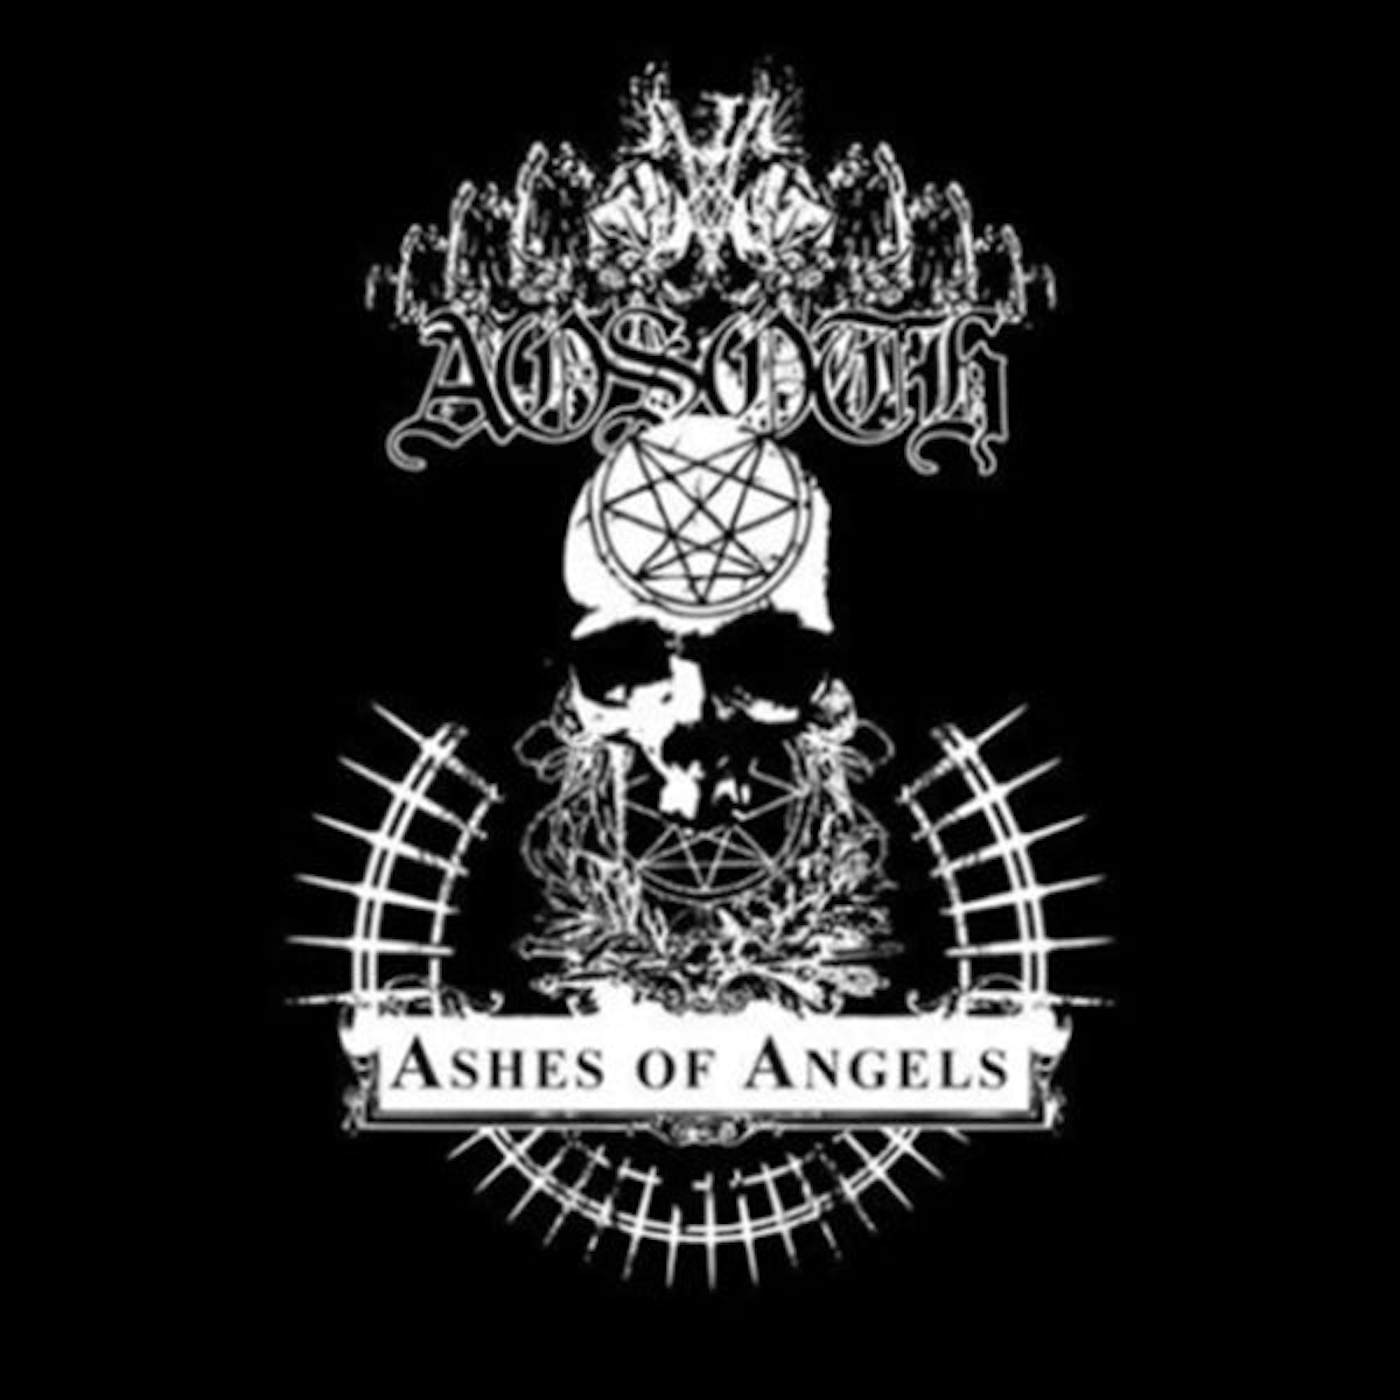 Aosoth LP - Ashes Of Angels  (Black W/ White Splatter Vinyl)